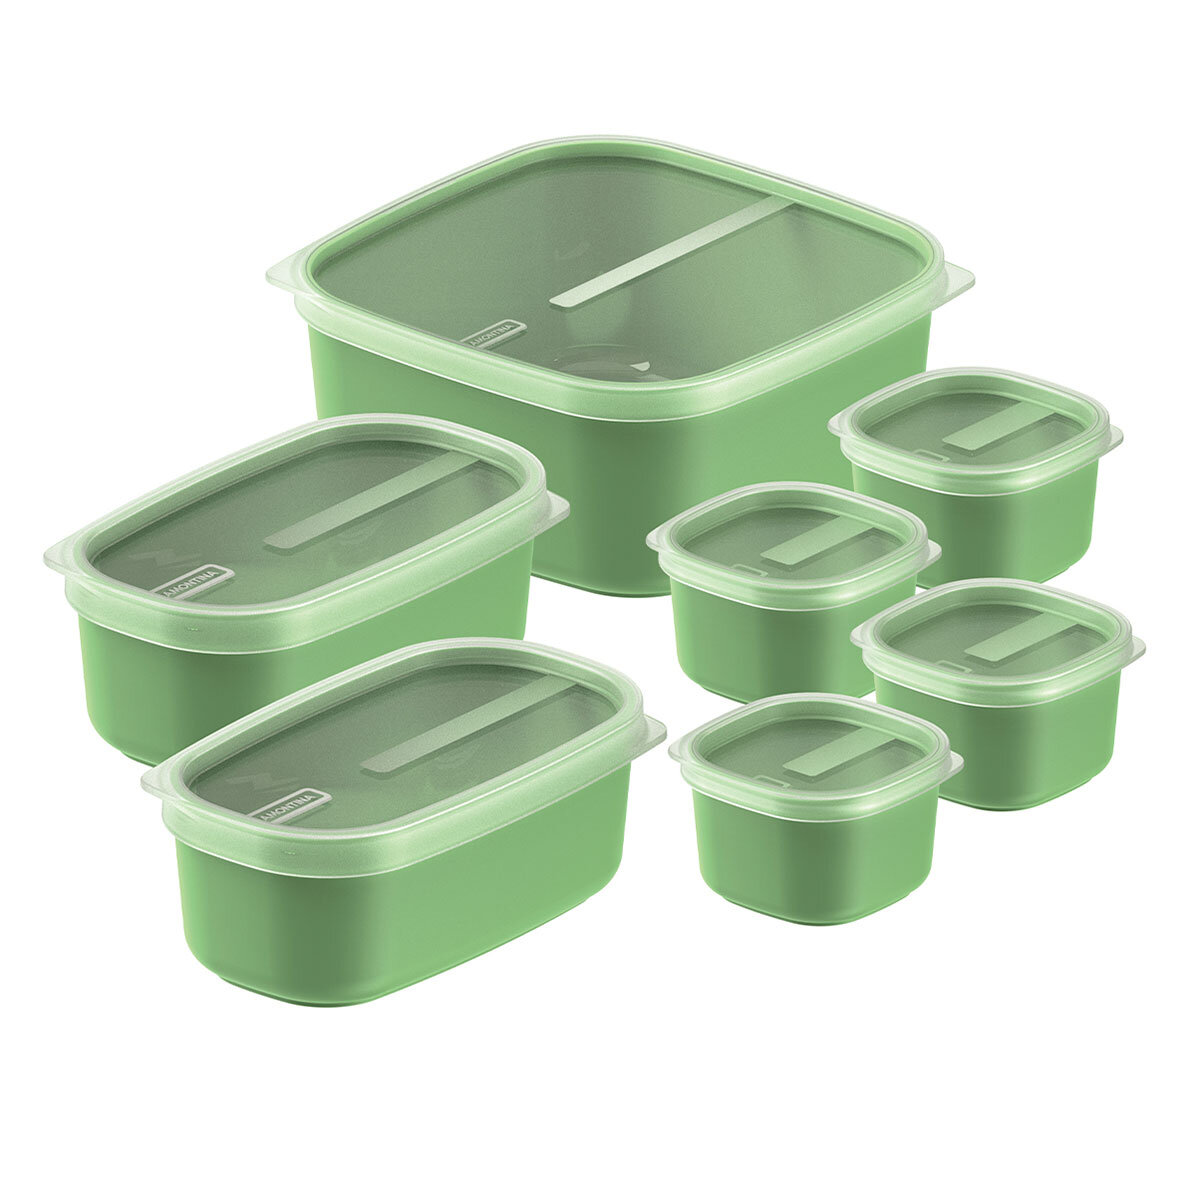 Tramontina Food Storage Set, 7 Piece - Green